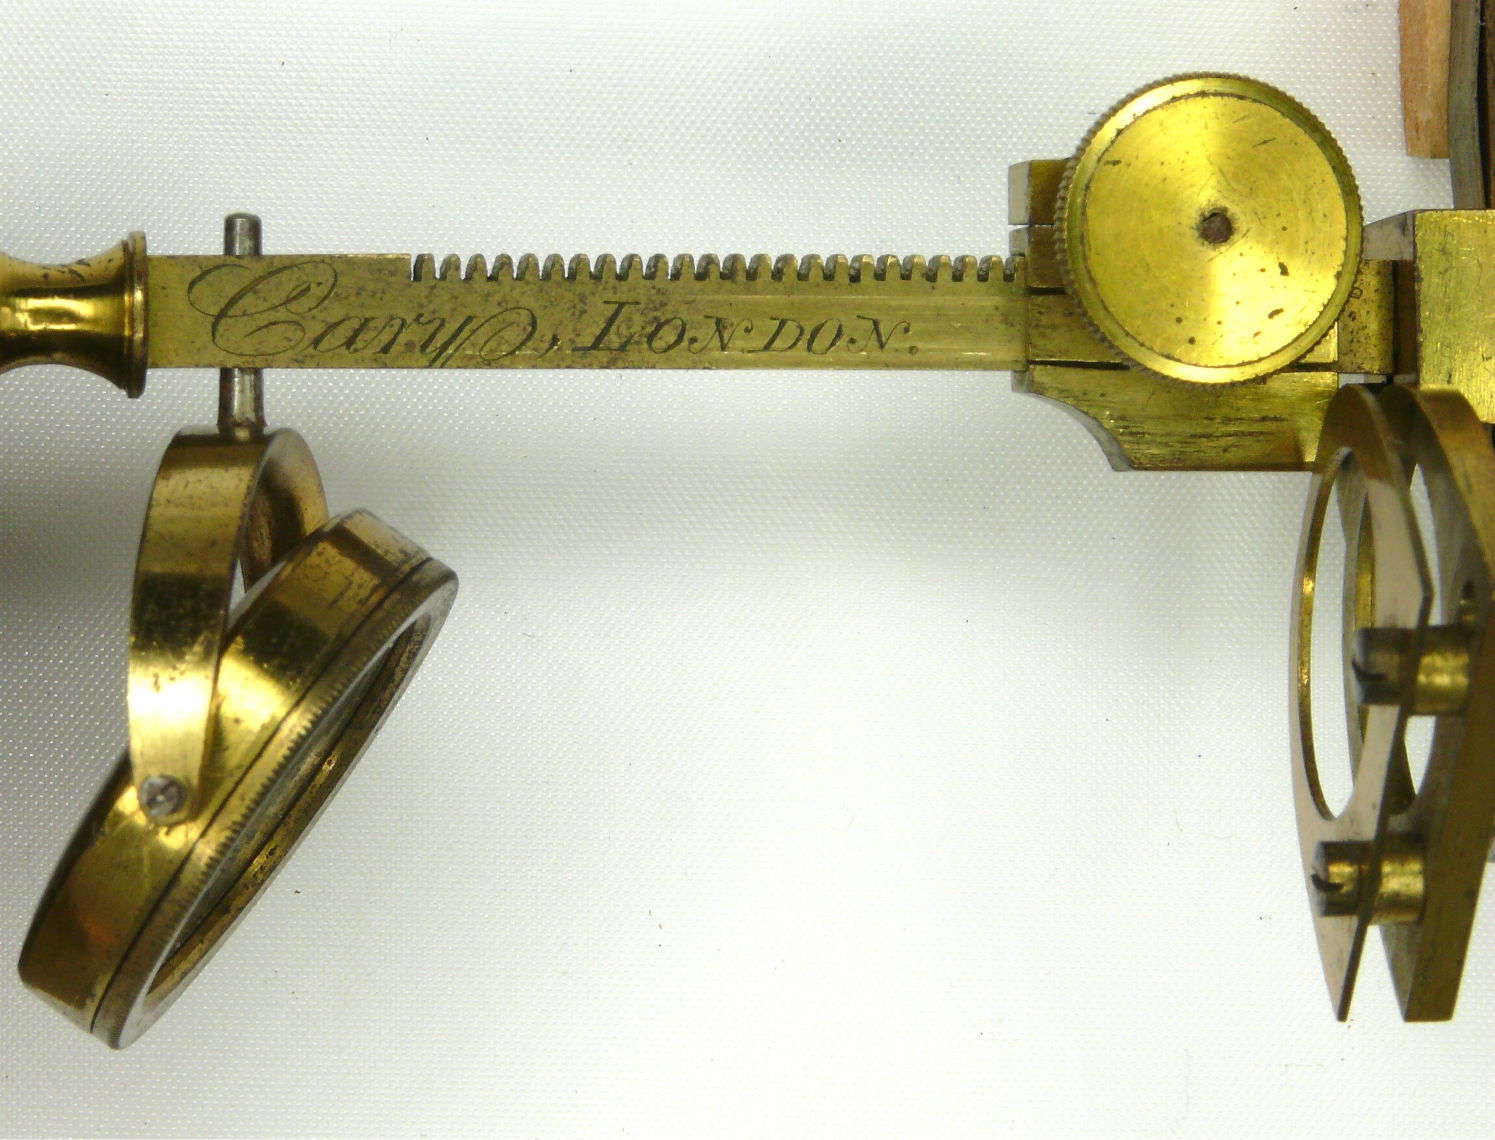 Microscope de voyage
(type Cuff)